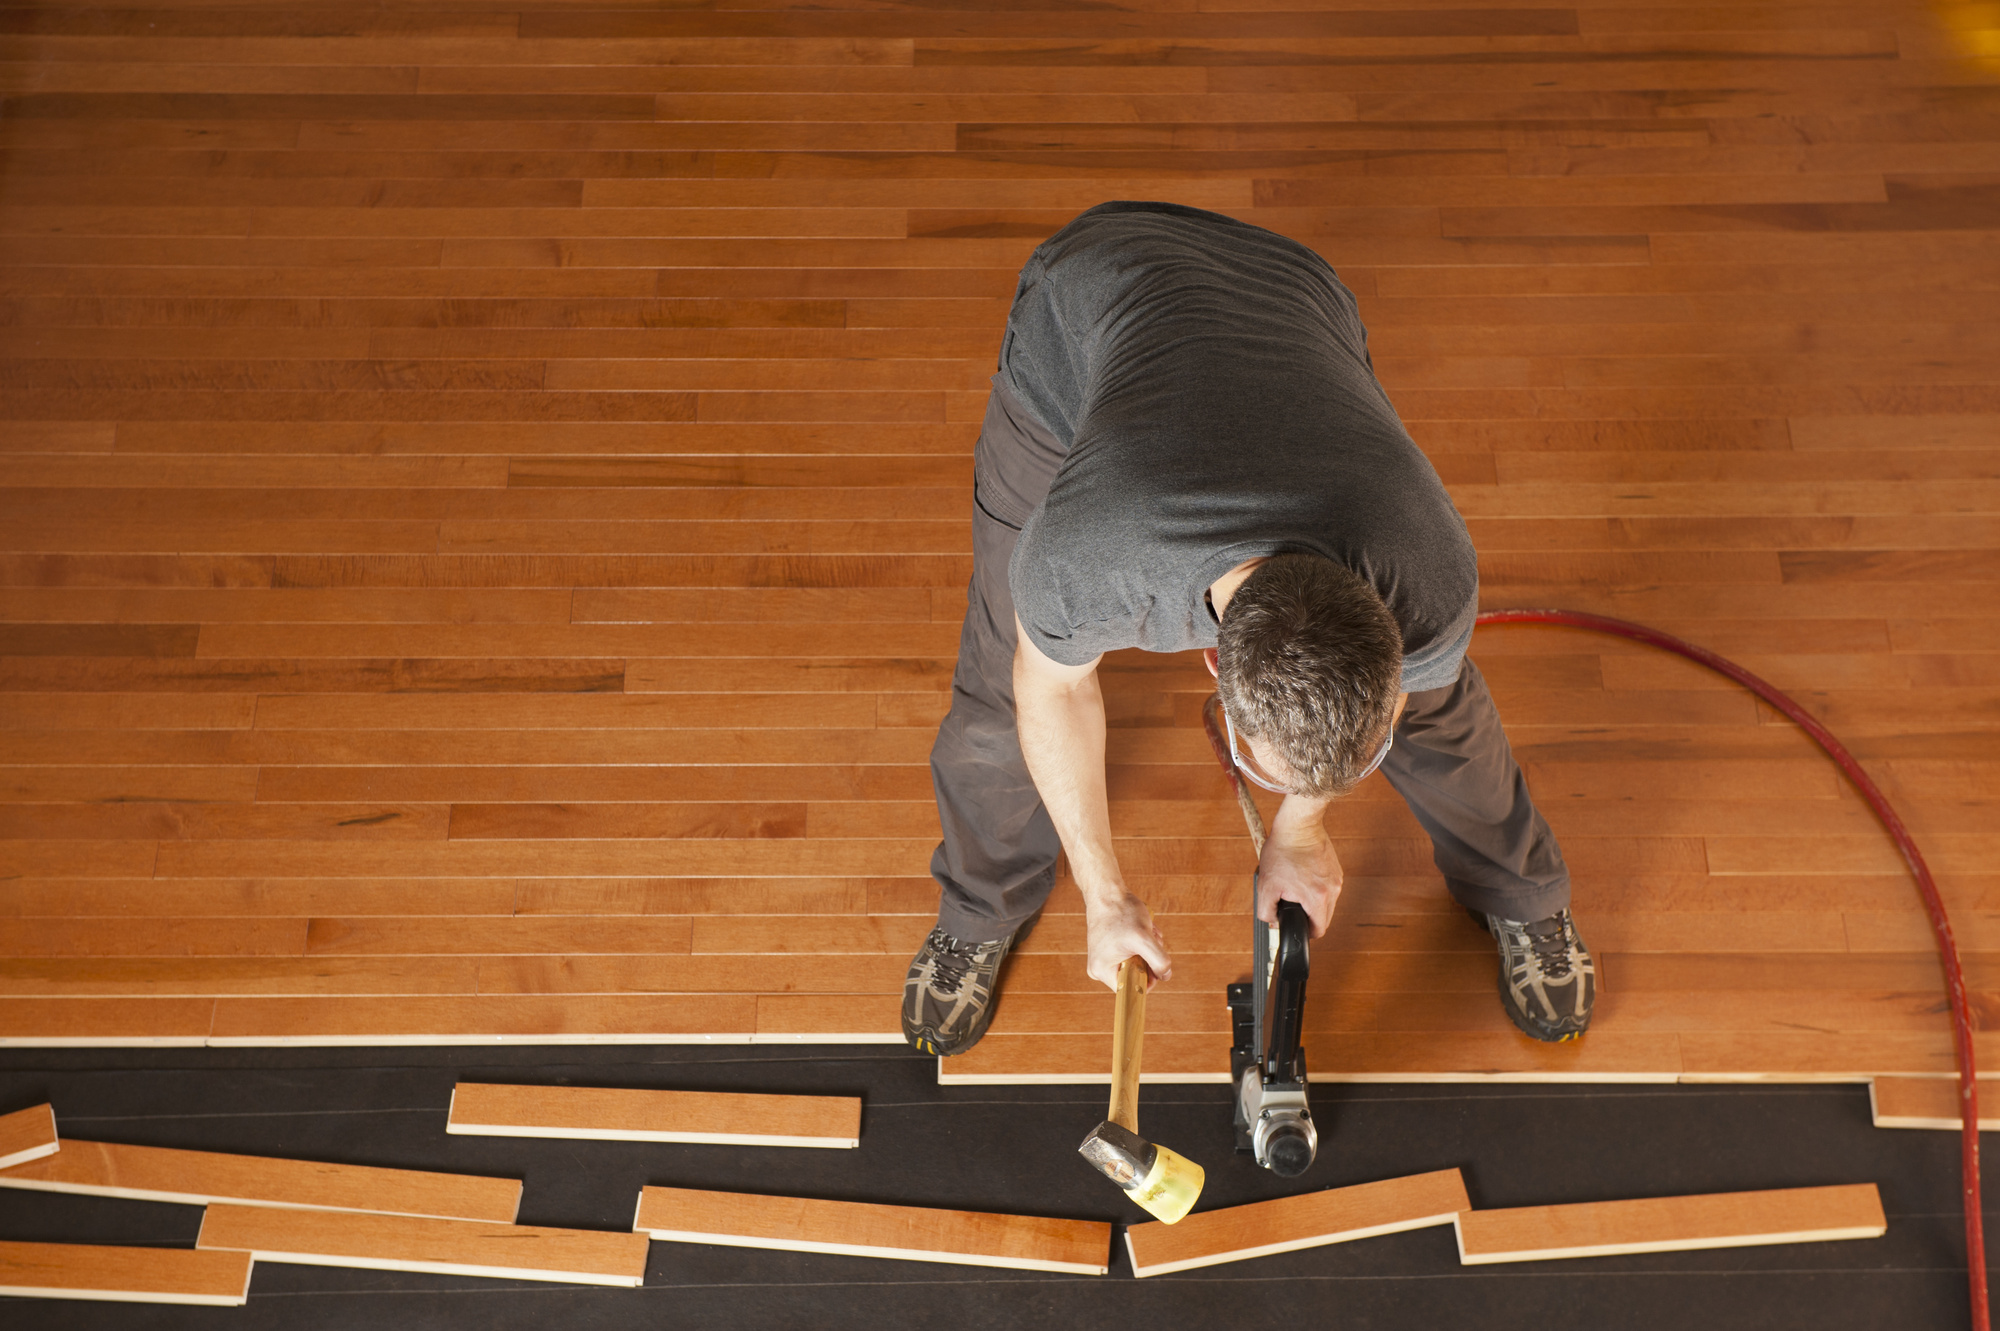 Hardwood Flooring Cost To Install, Floating Hardwood Floor Installation Cost